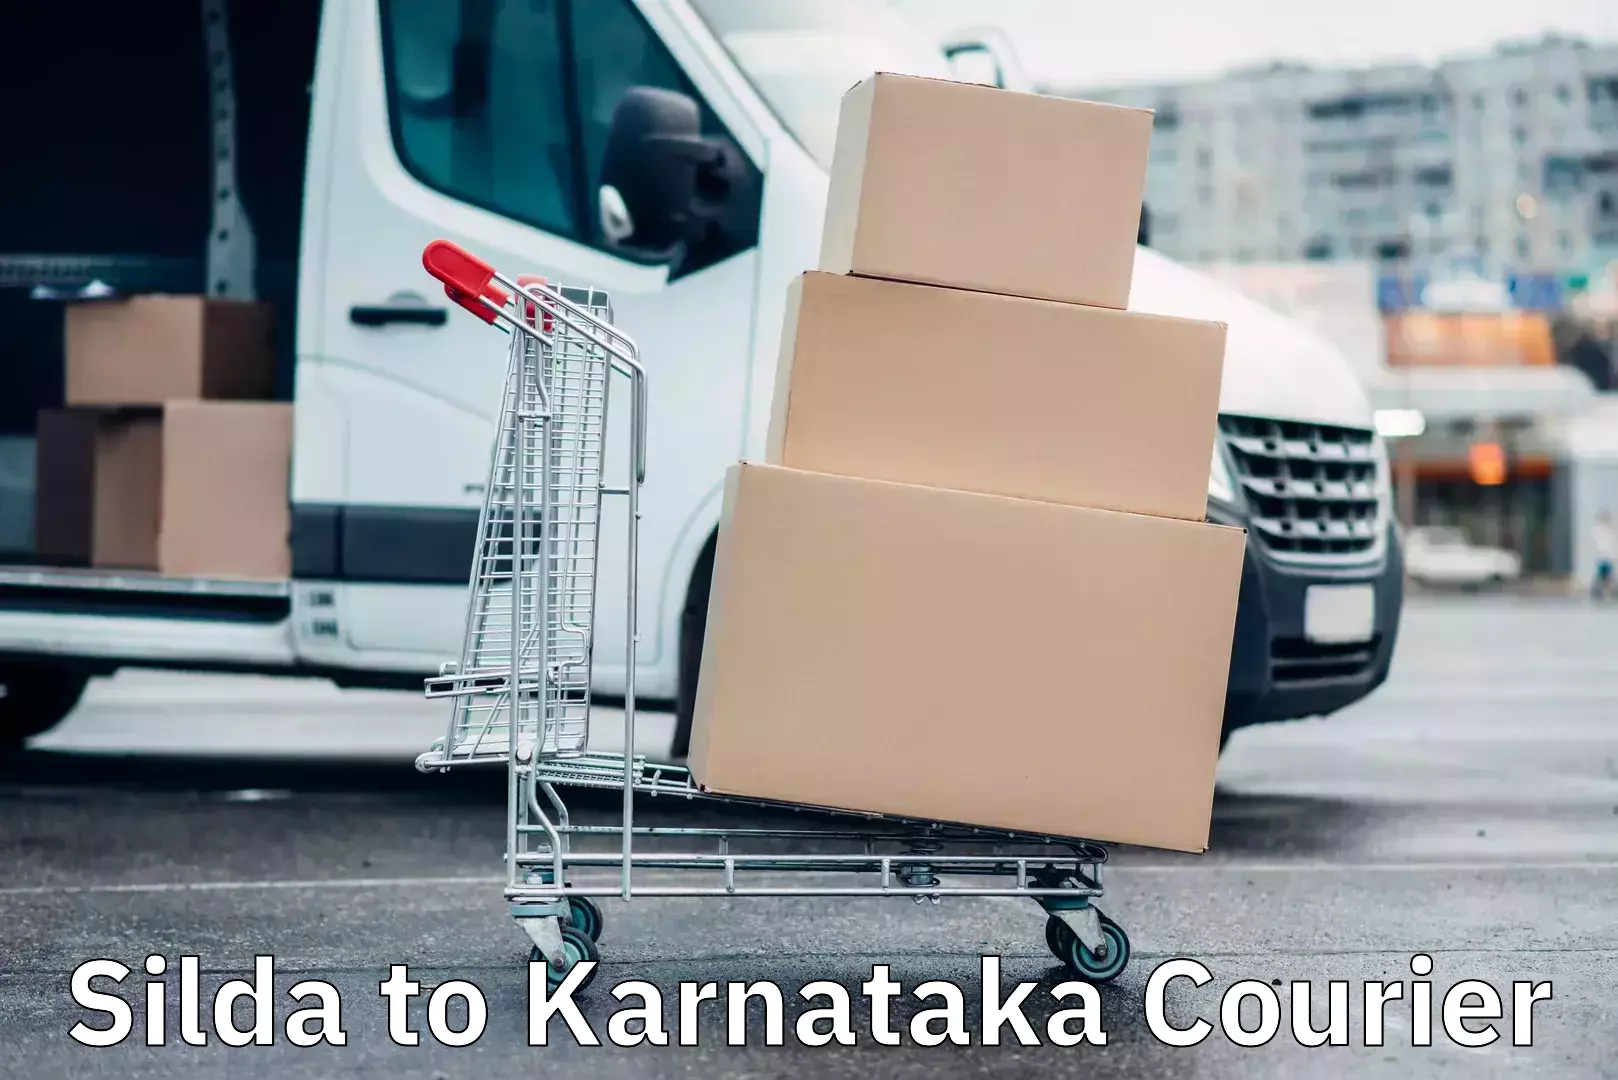 Smart parcel delivery Silda to Karnataka